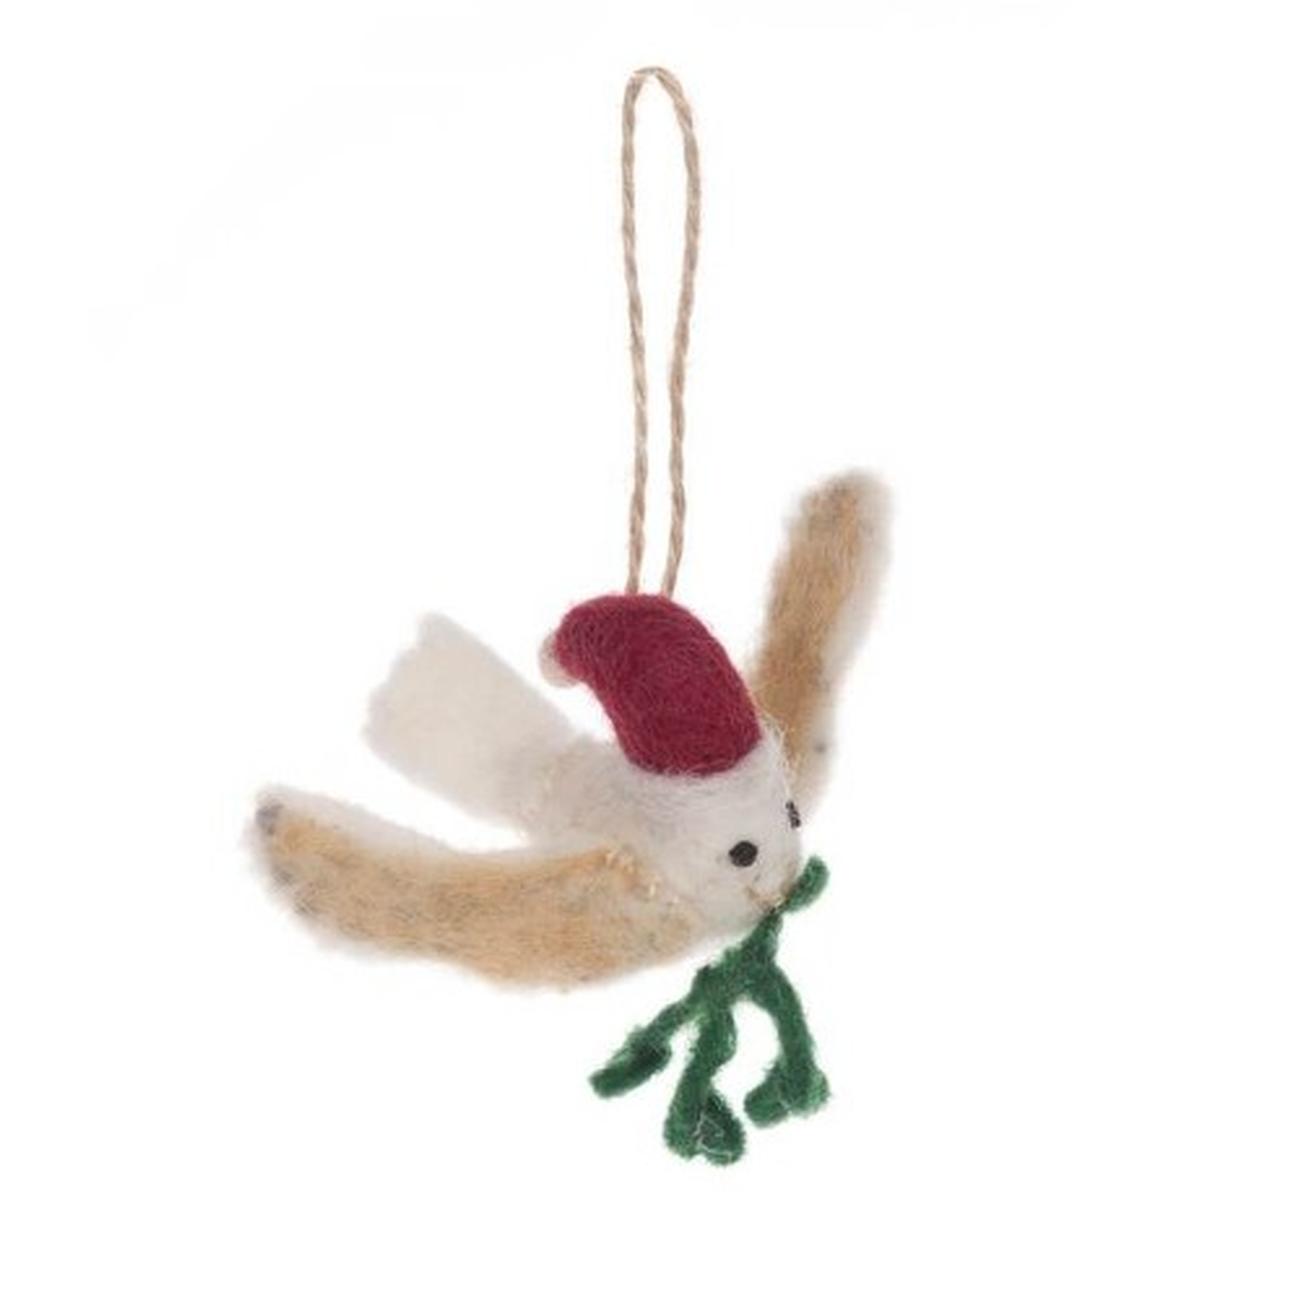 sophie-allport-Christmas-felt-decoration-festive-owl - Sophie Allport Festive Owl Felt Decoration